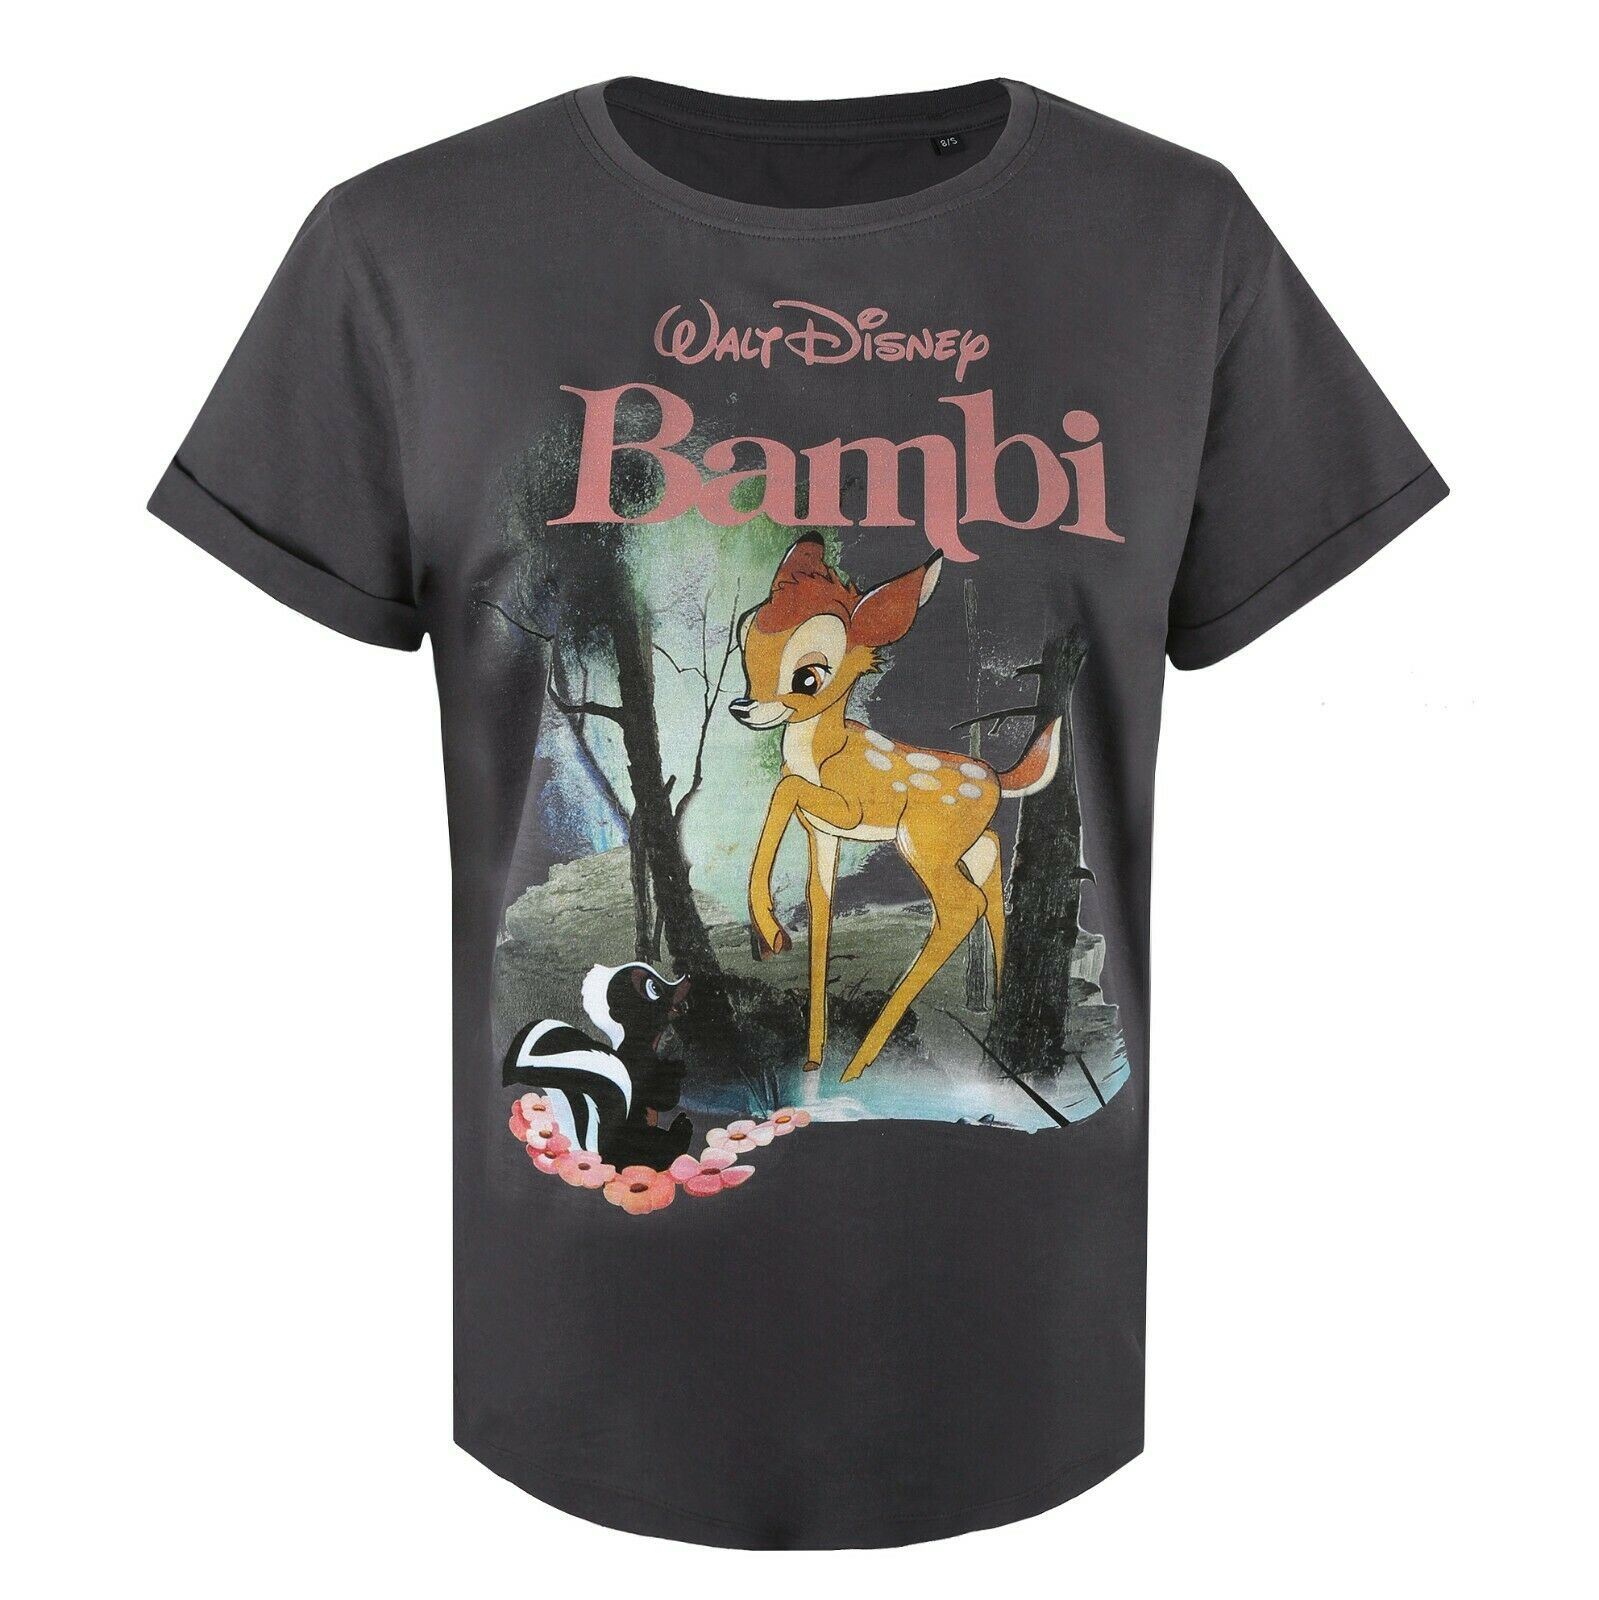 Official Disney Ladies Bambi Woodland Fashion T-shirt Black S - XL | eBay